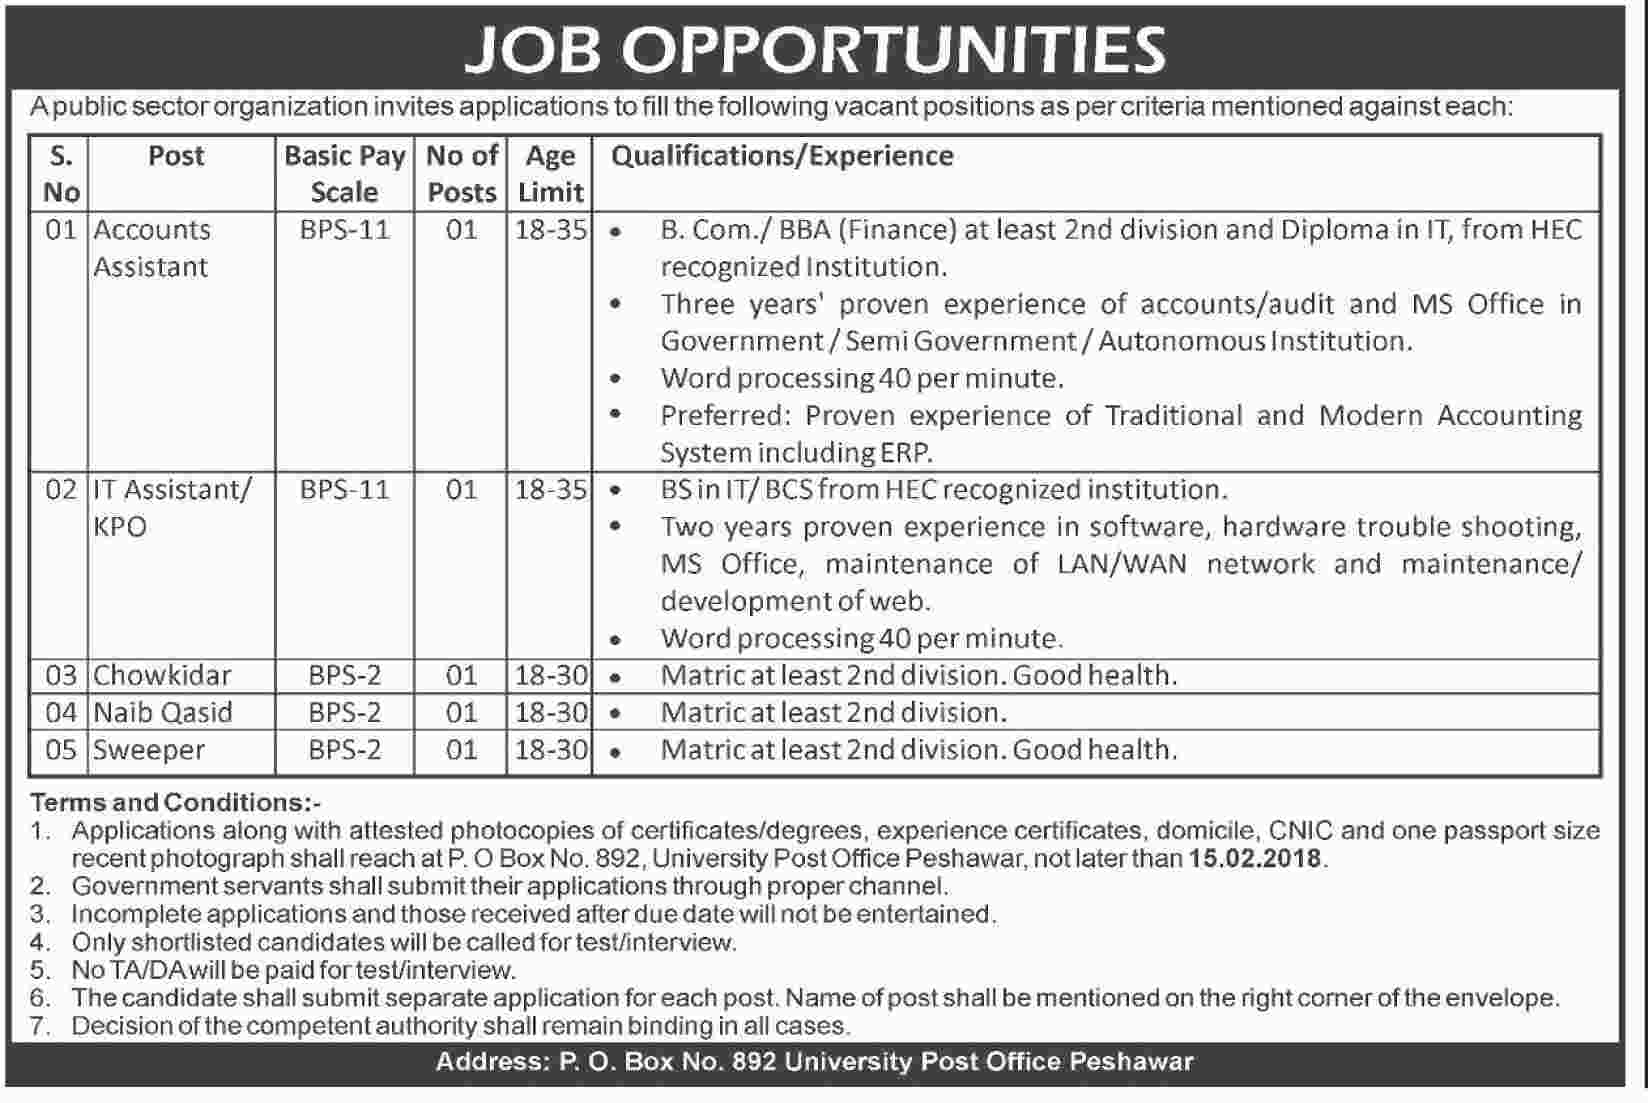 jobs in Peshawar University 02 Feb 2018